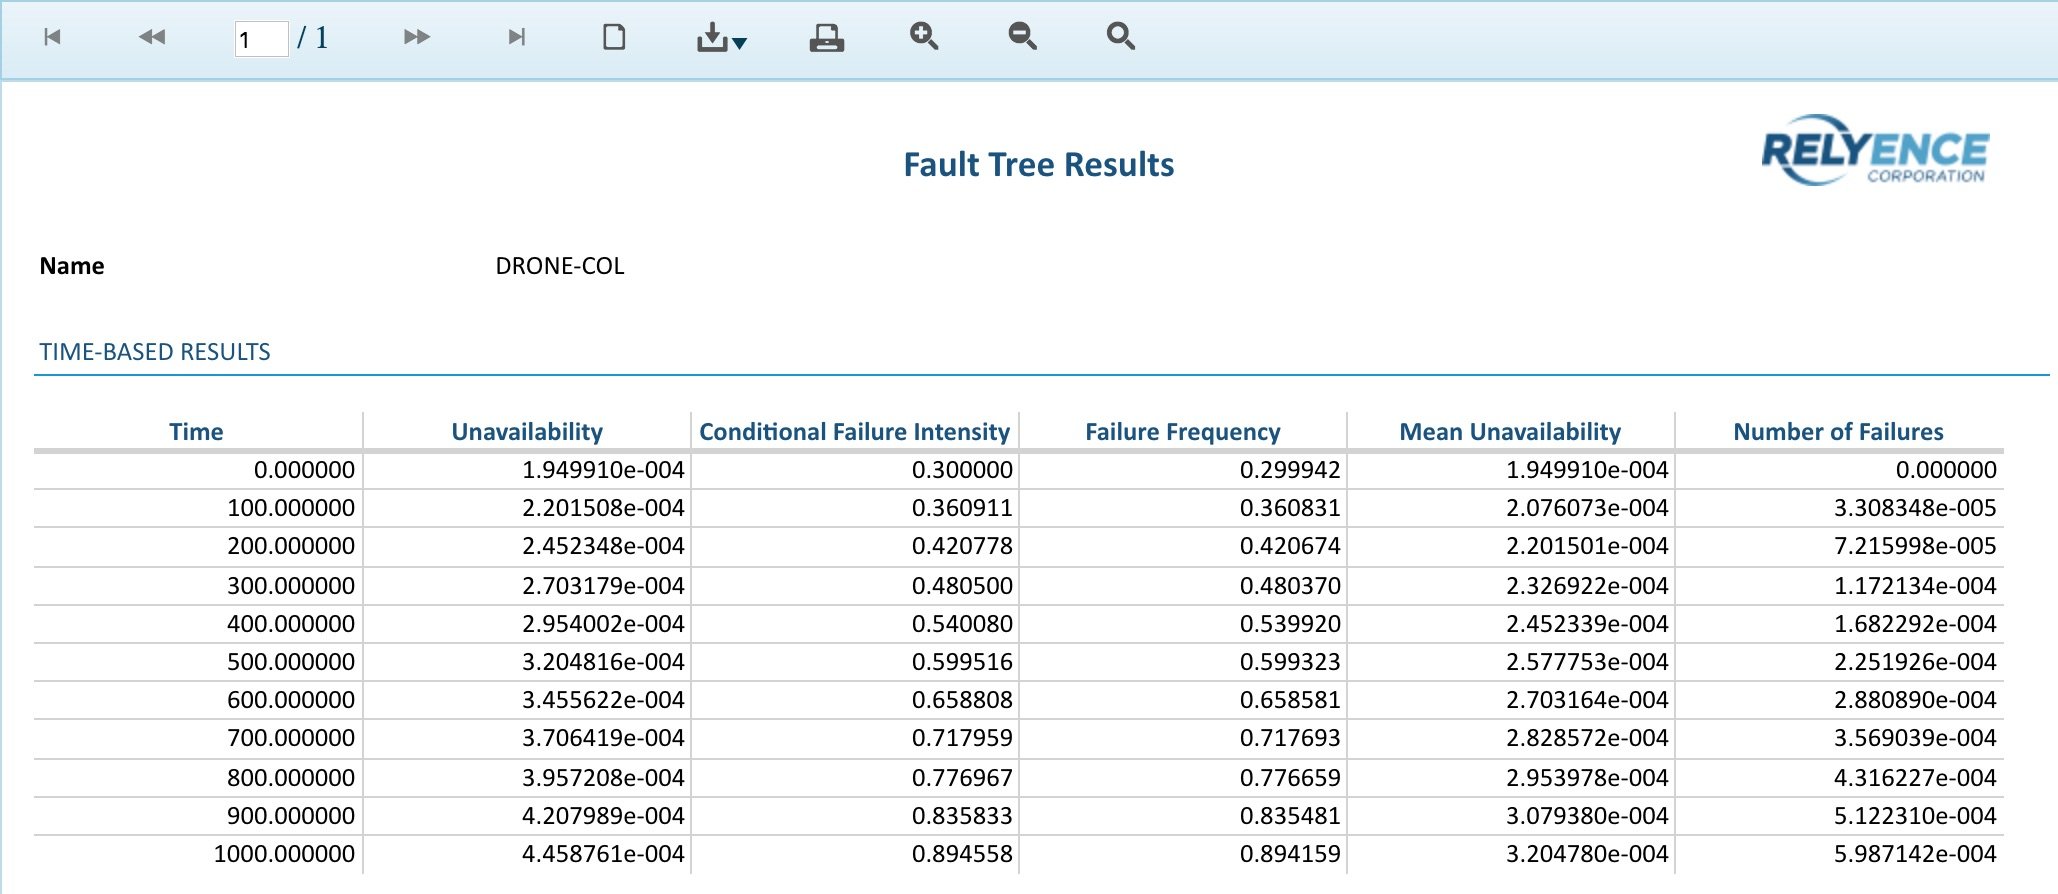 Fault Tree Report